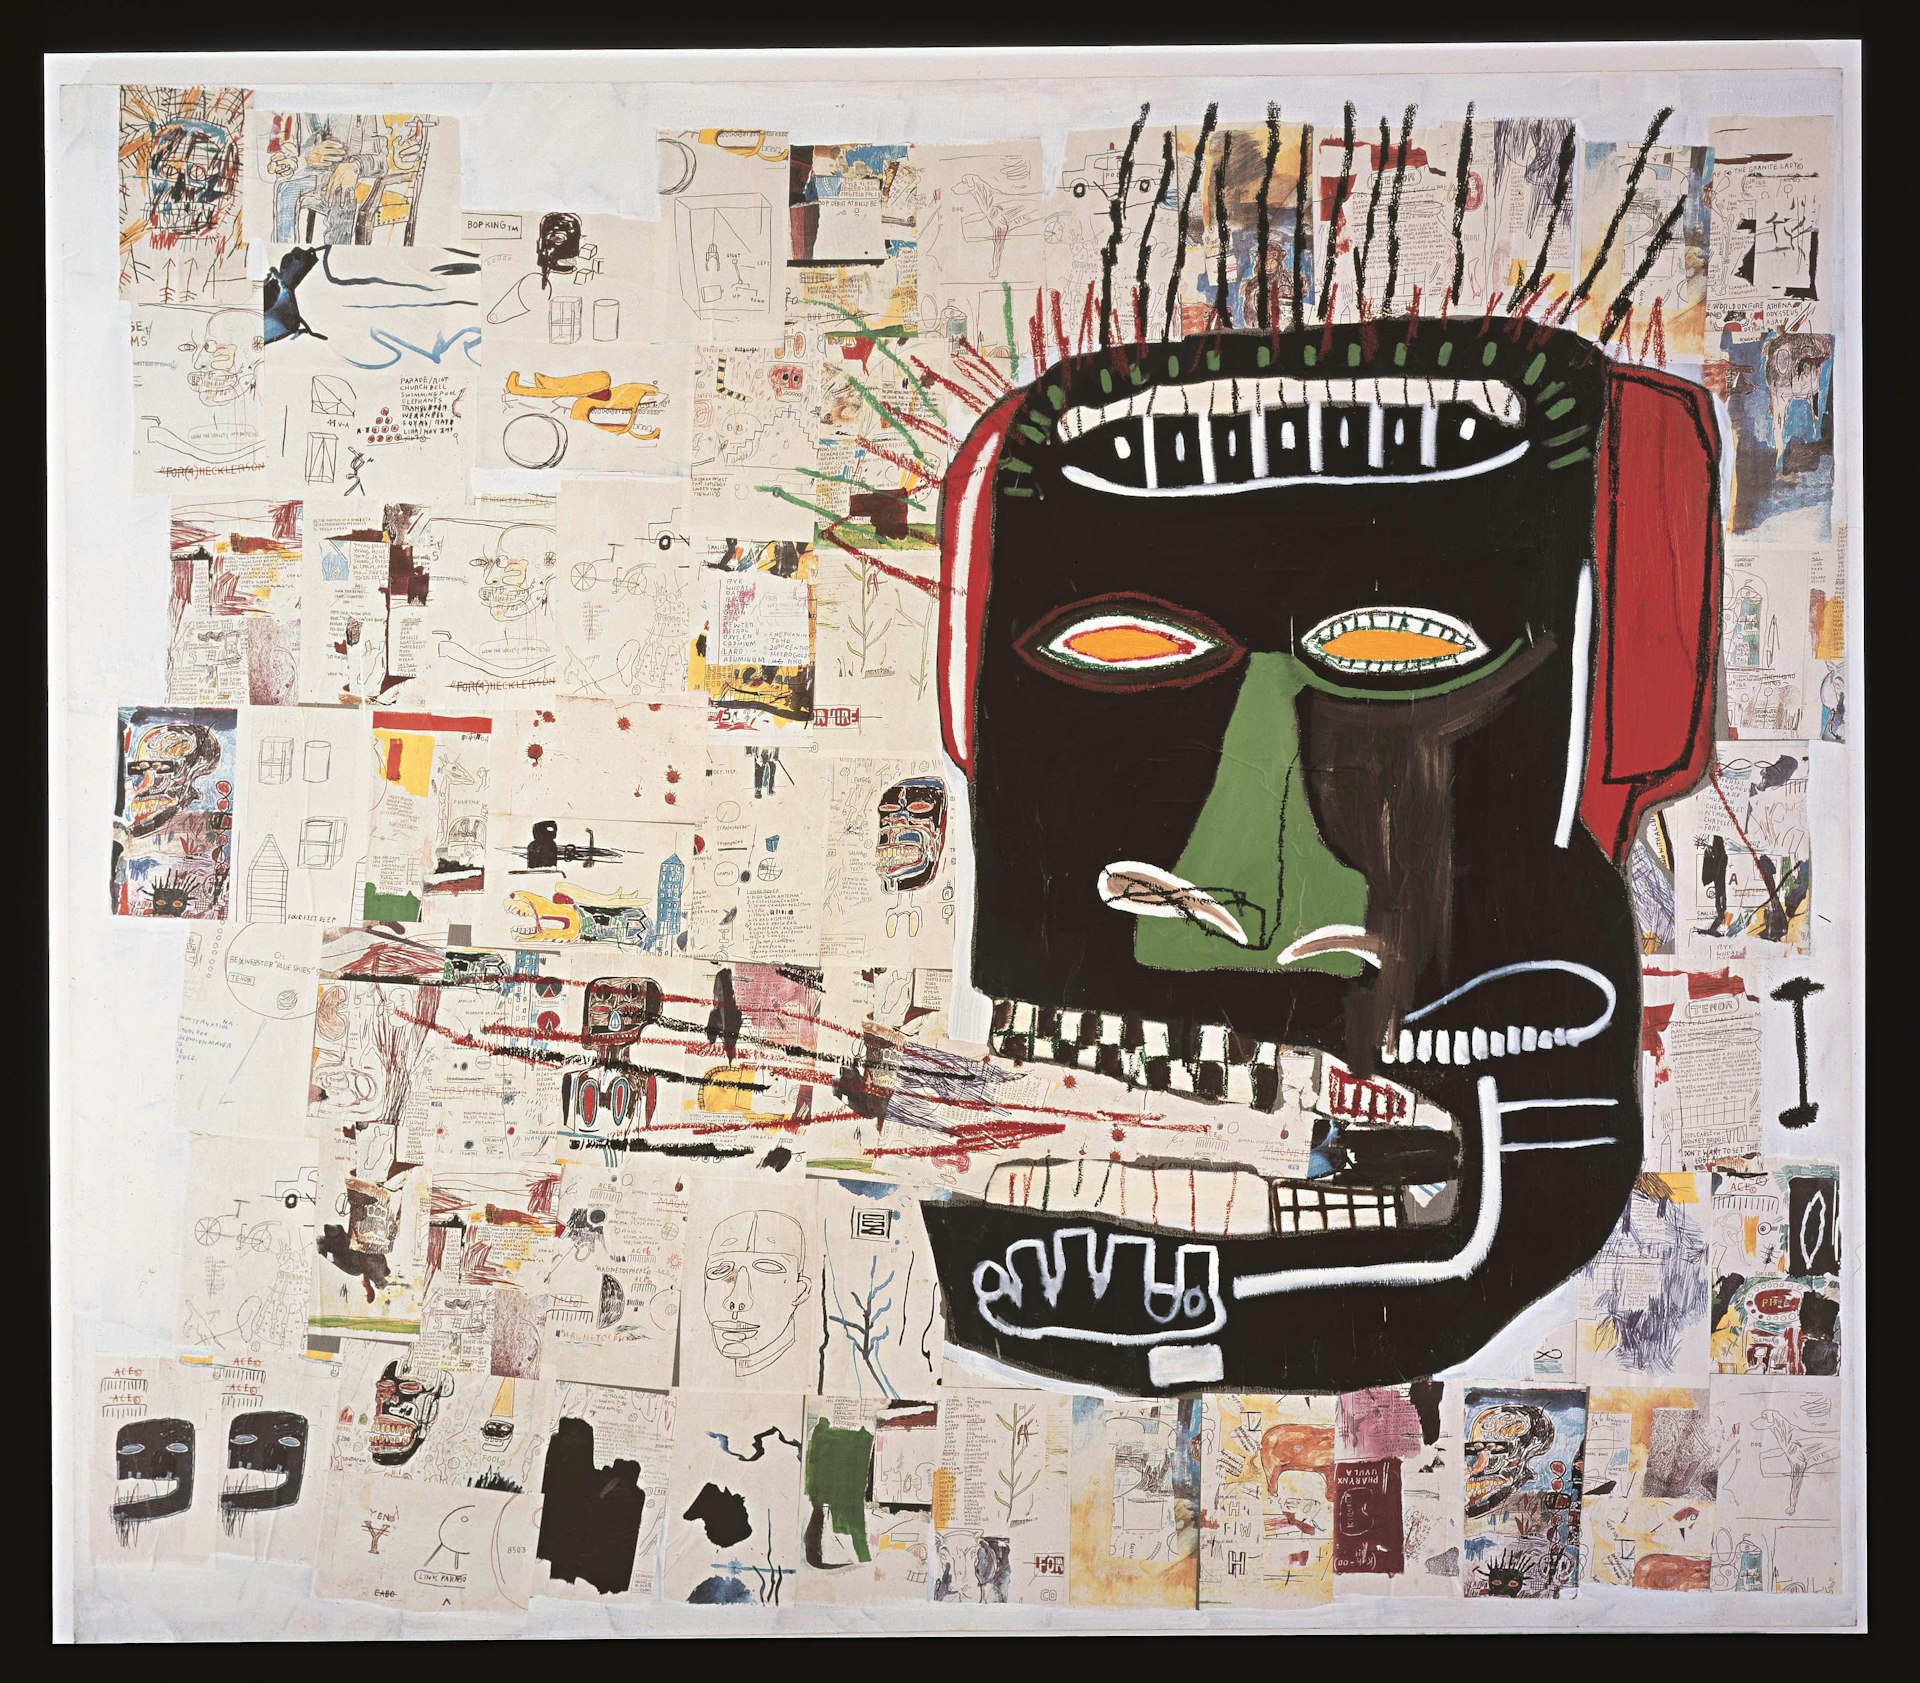  Jean-Michel Basquiat Glenn, 1984 Private collection. © The Estate of Jean-Michel Basquiat. Licensed by Artestar, New York.